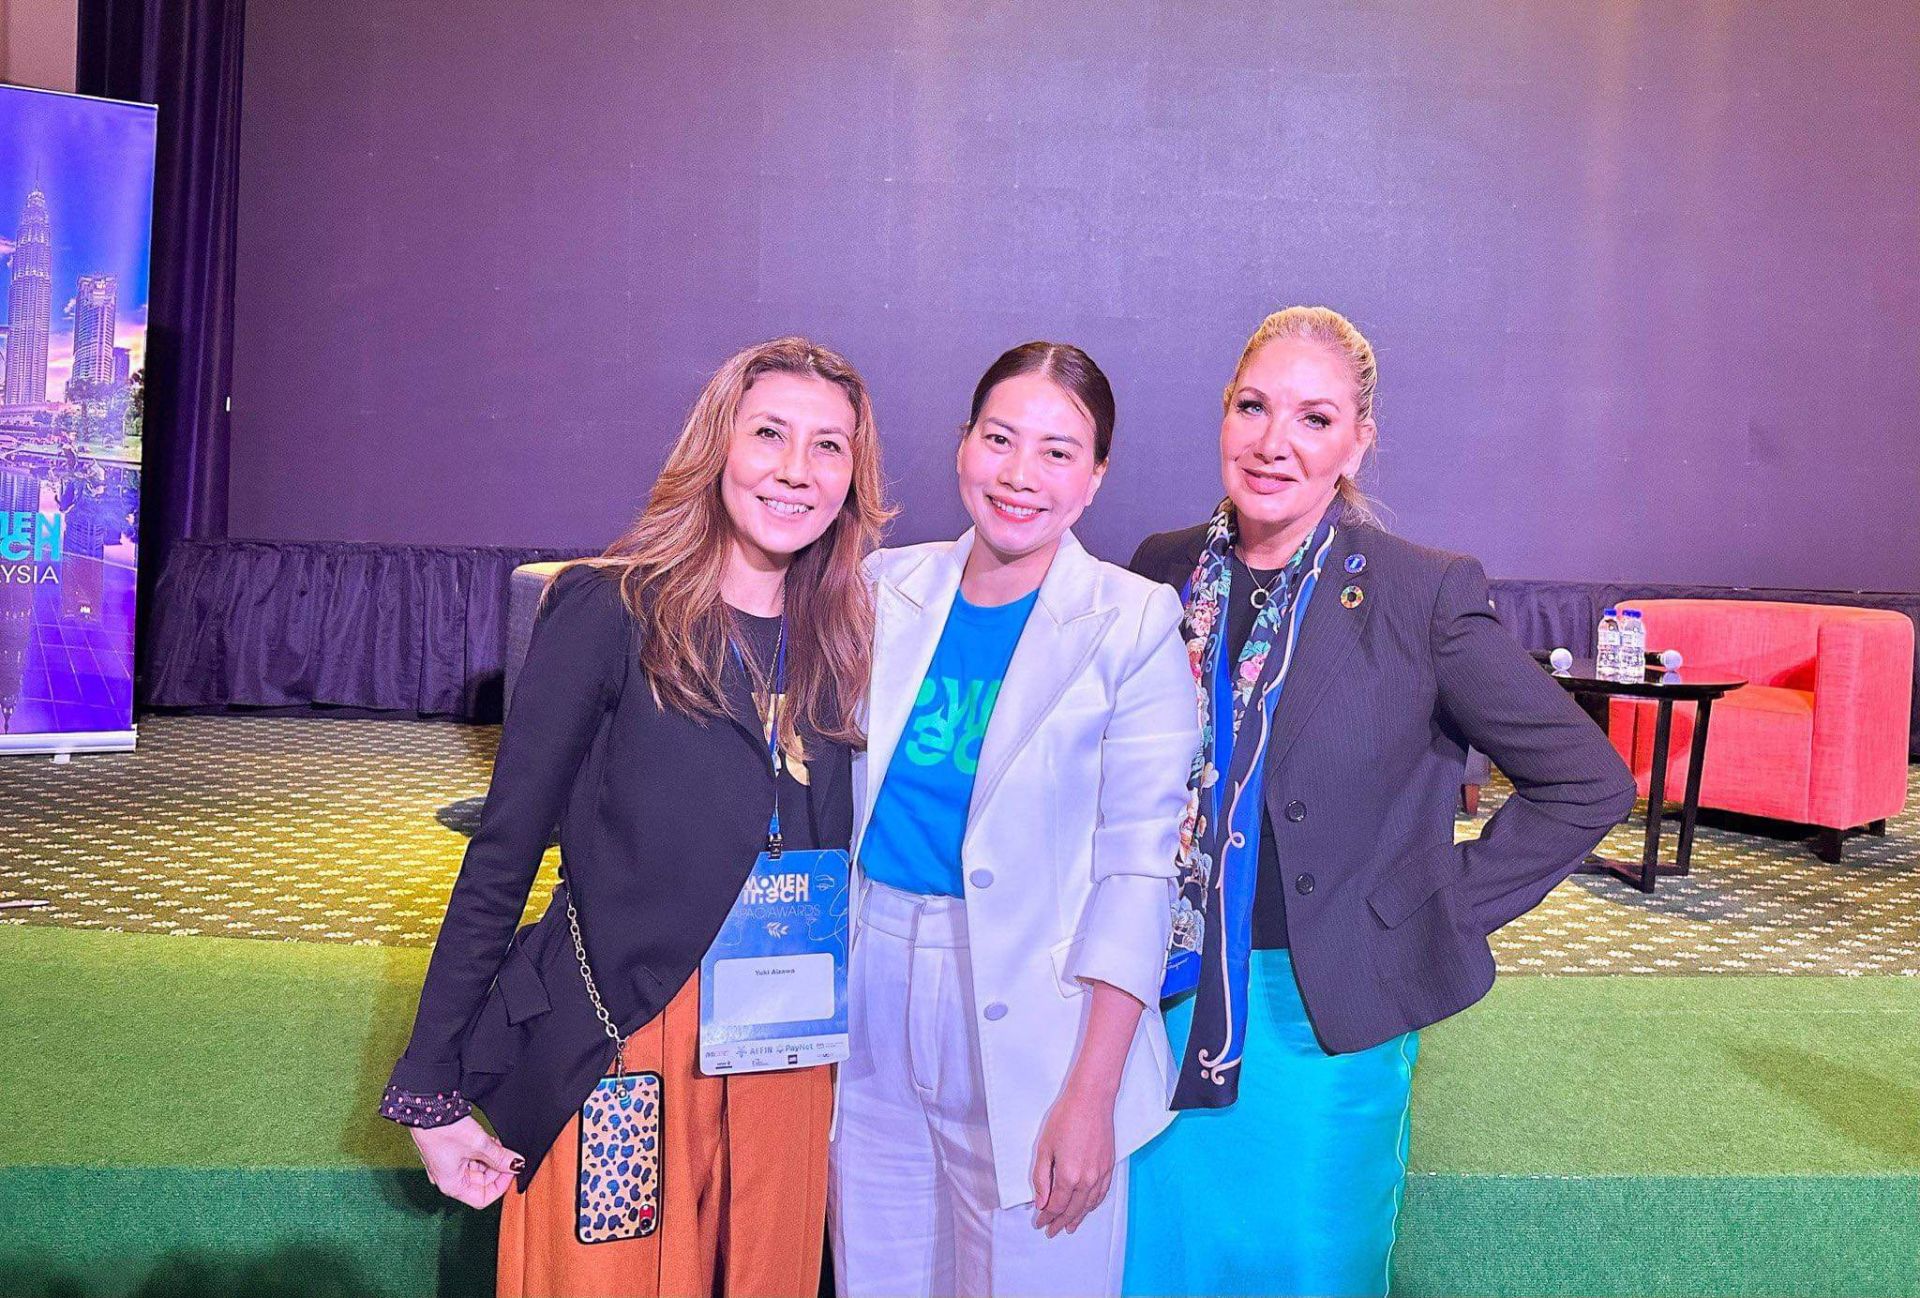 Nguyen Thi Kieu Quyen, CEO of Sharework technology company, has taken on the role of Ambassador for Women in Tech in Vietnam